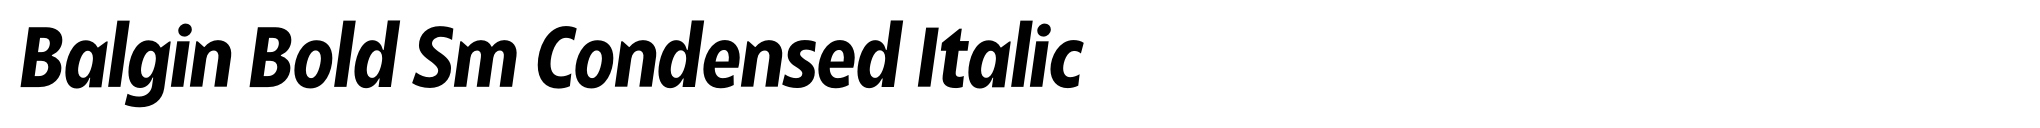 Balgin Bold Sm Condensed Italic image